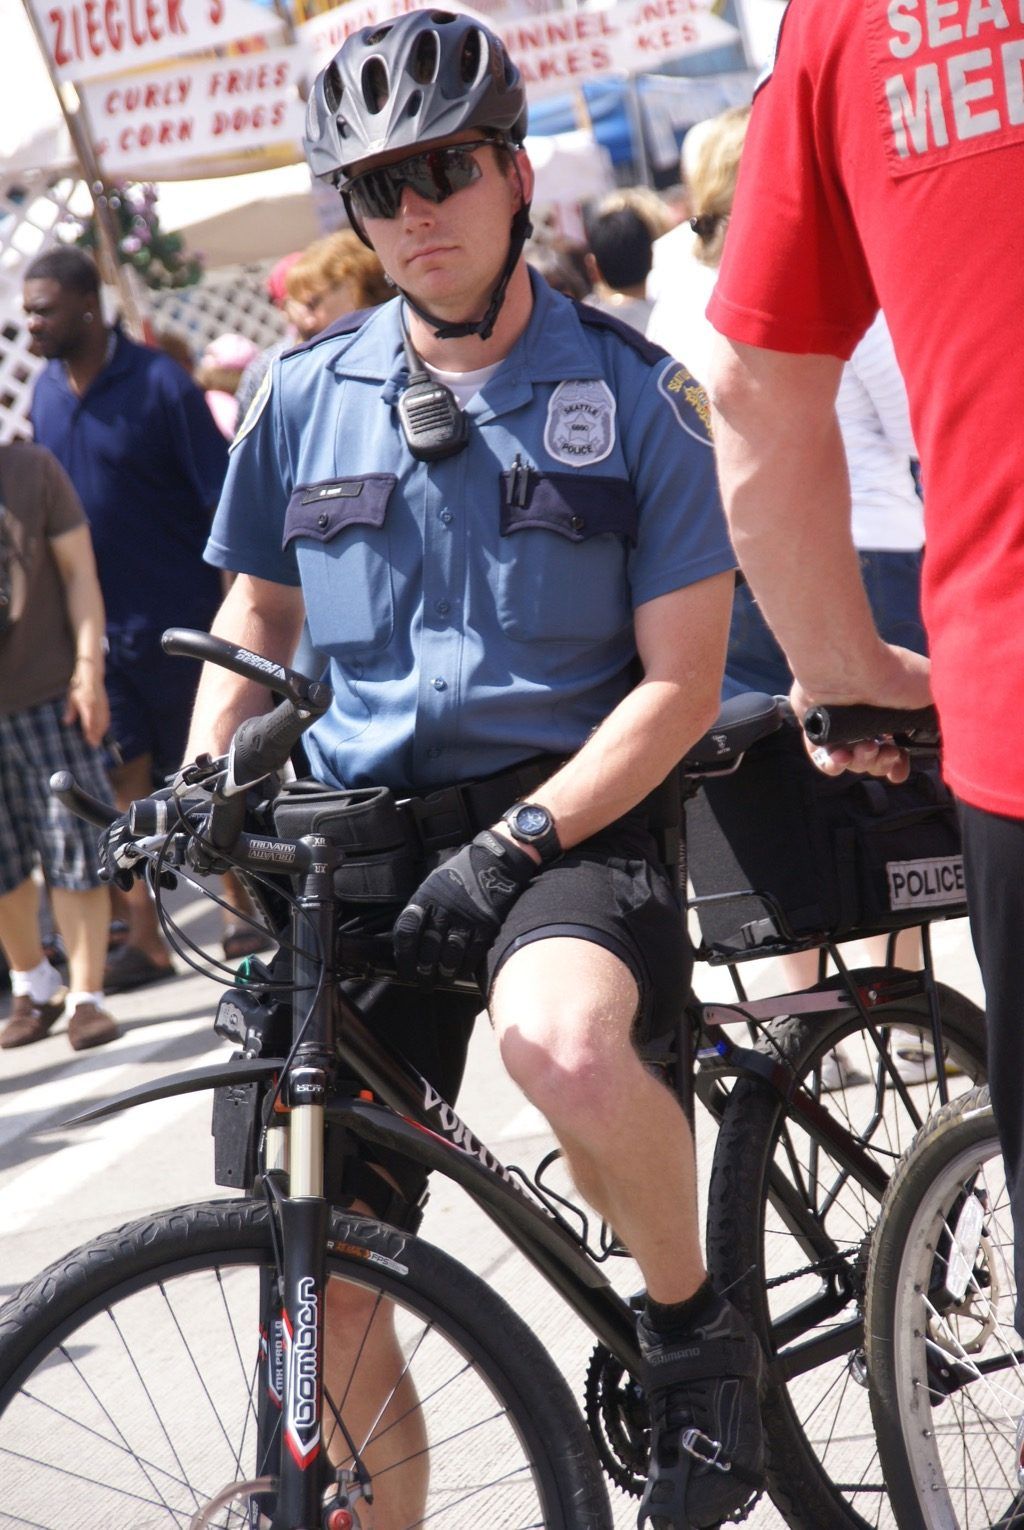 Pegawai polis menaiki basikal